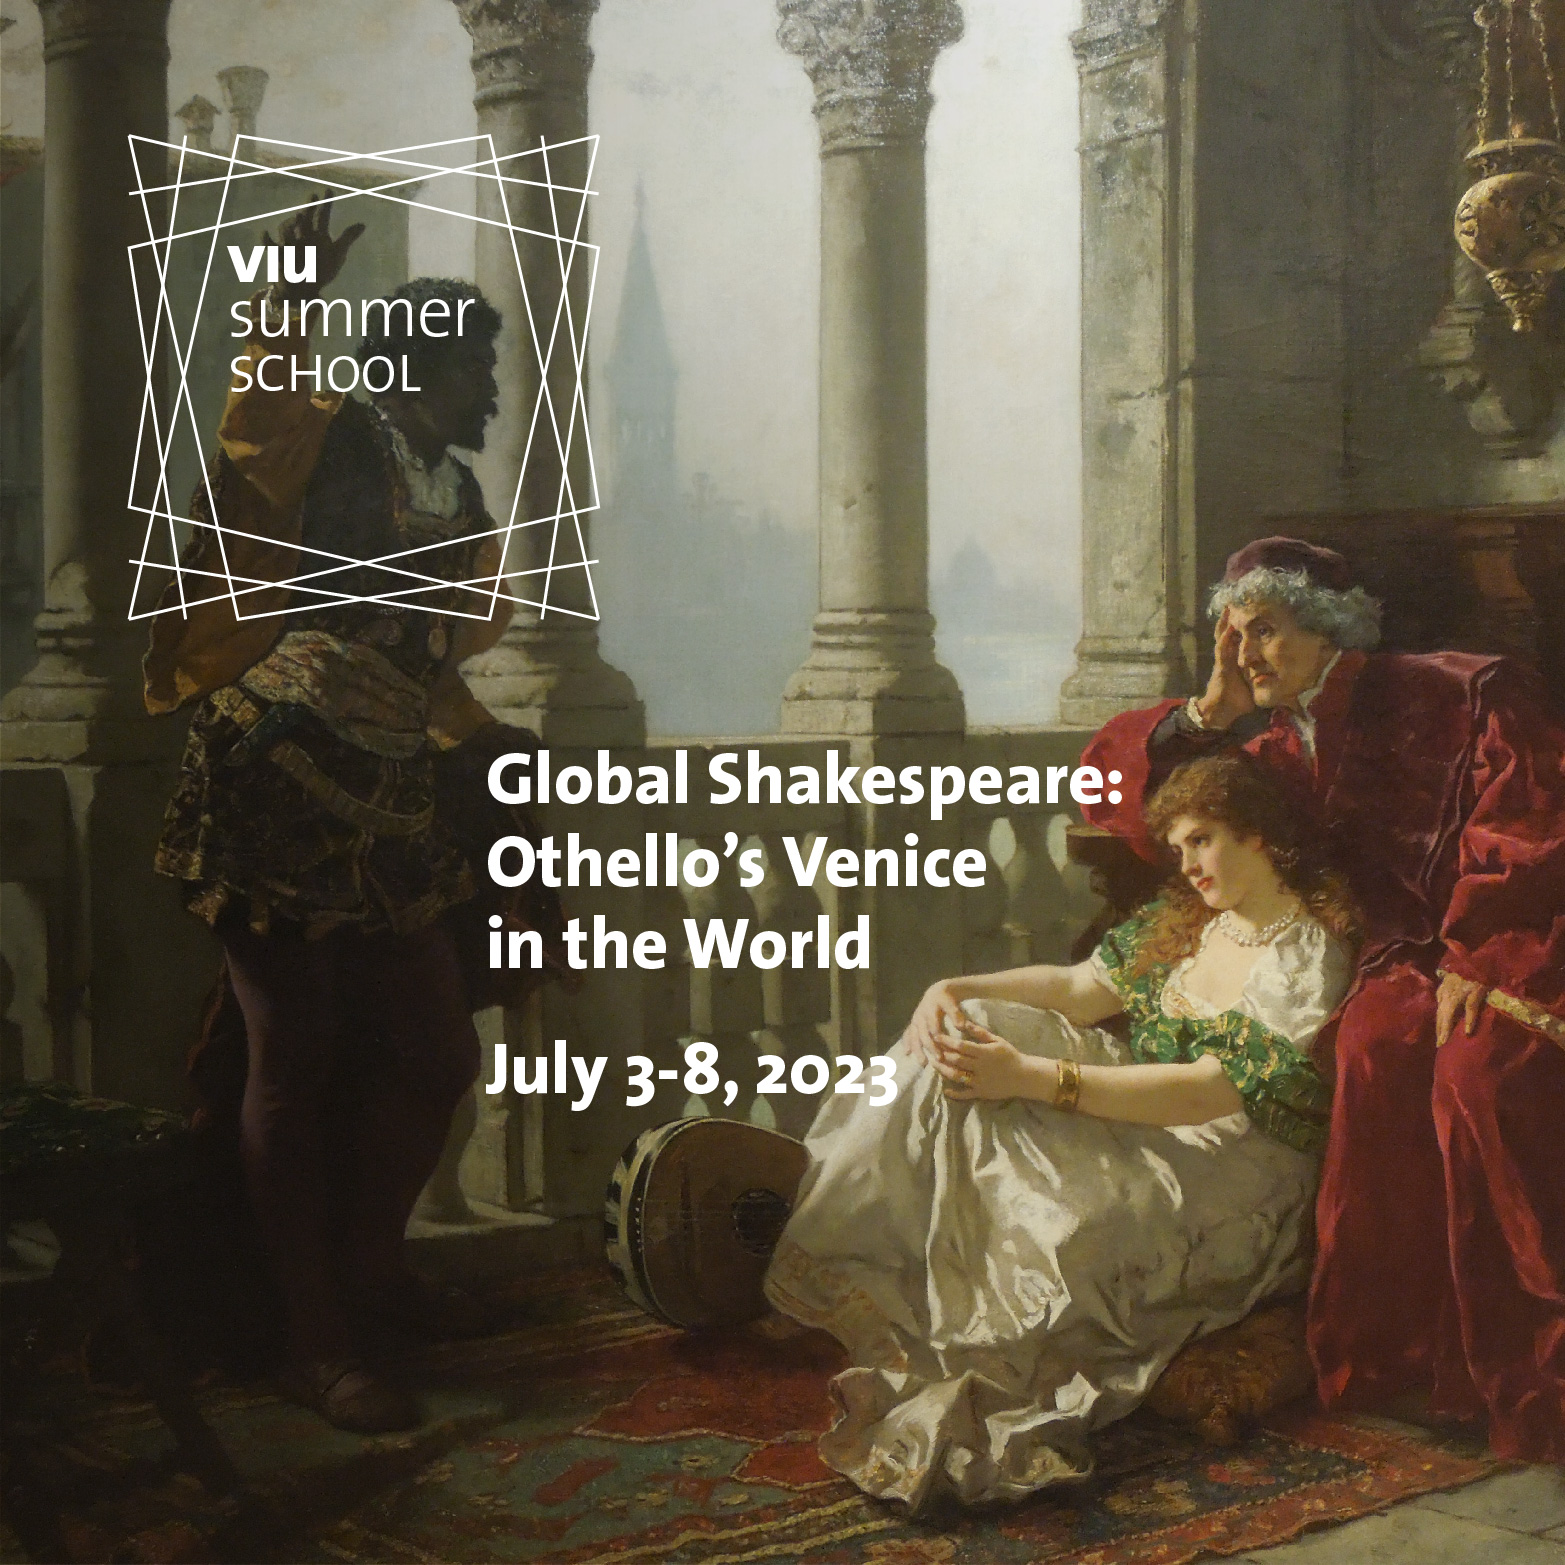 VIU Summer School Global Shakespeare 2023